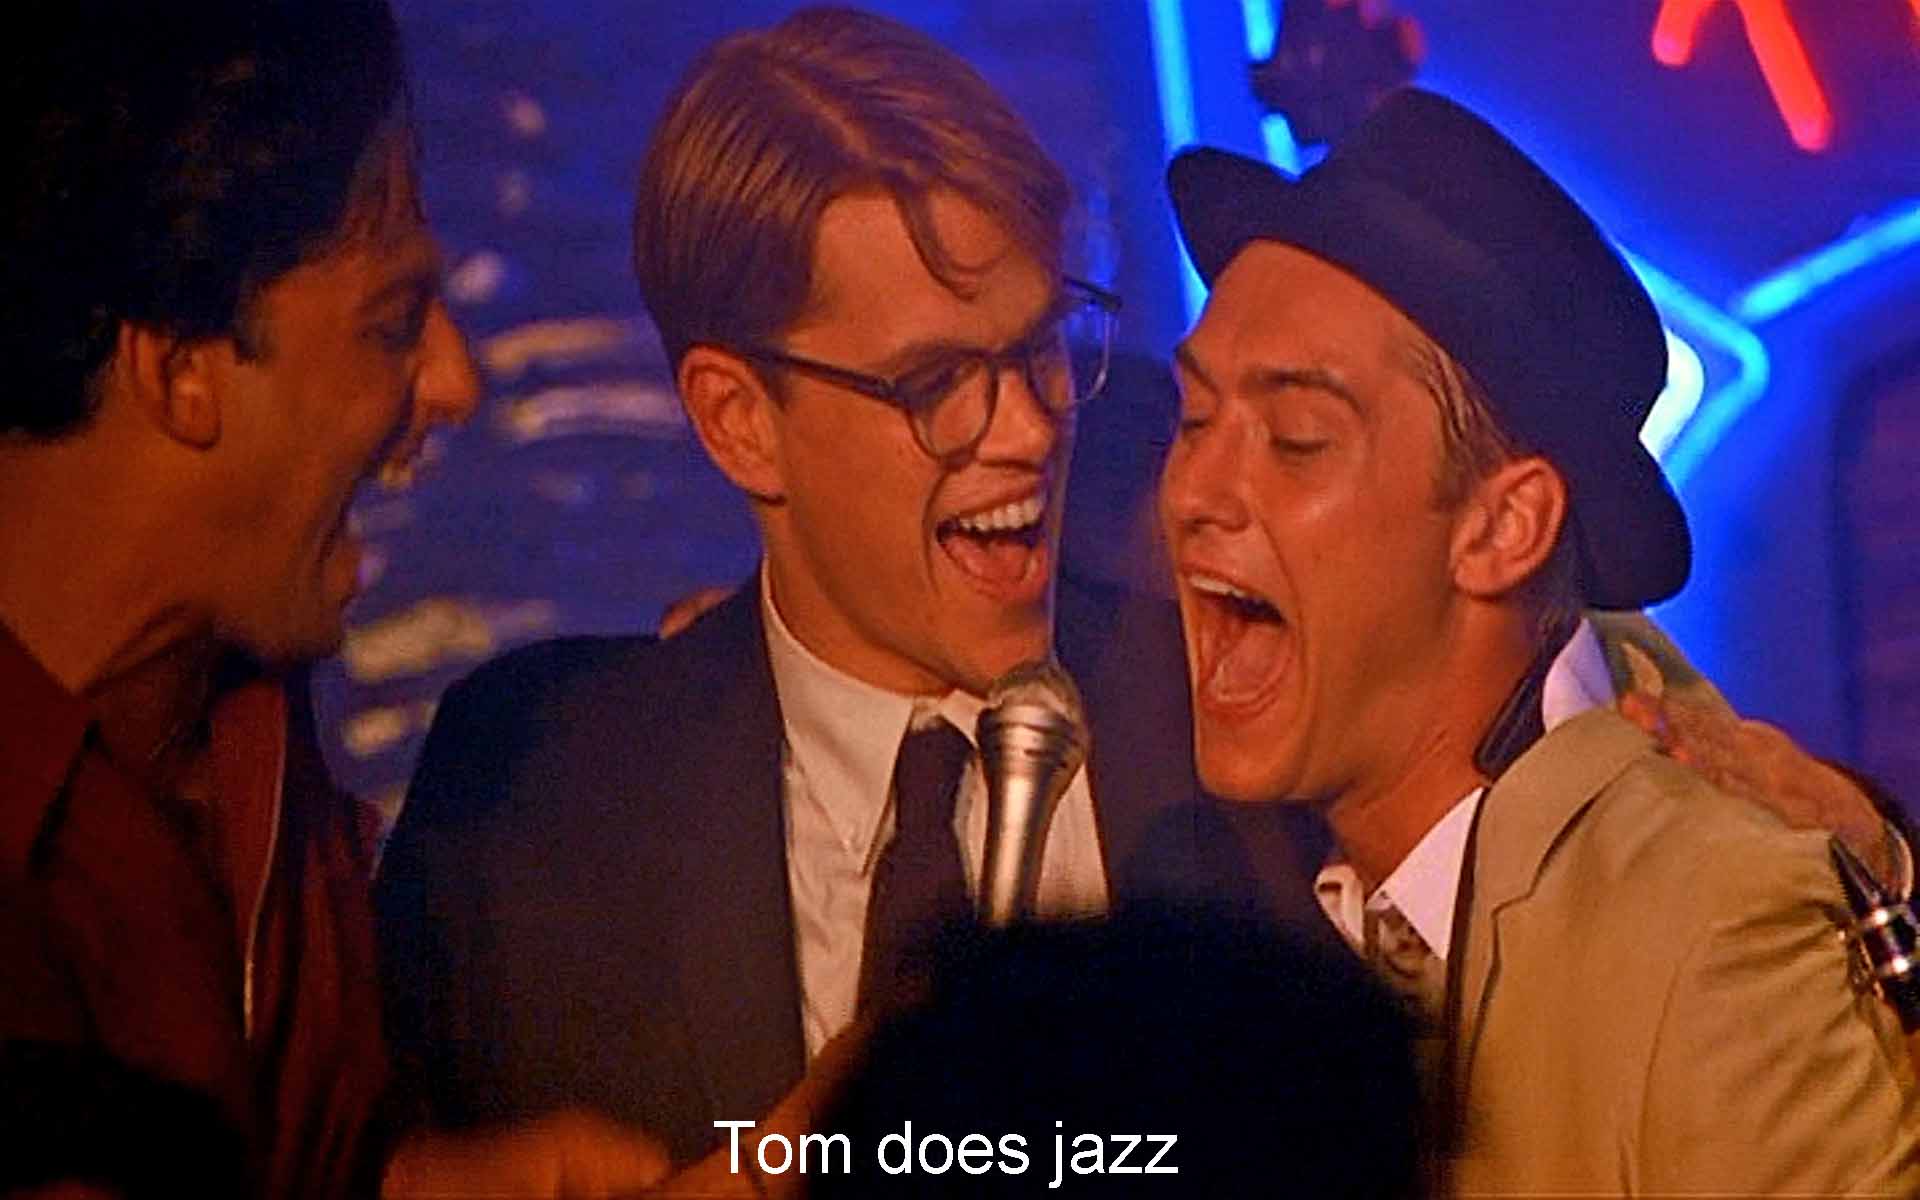 Tom does jazz